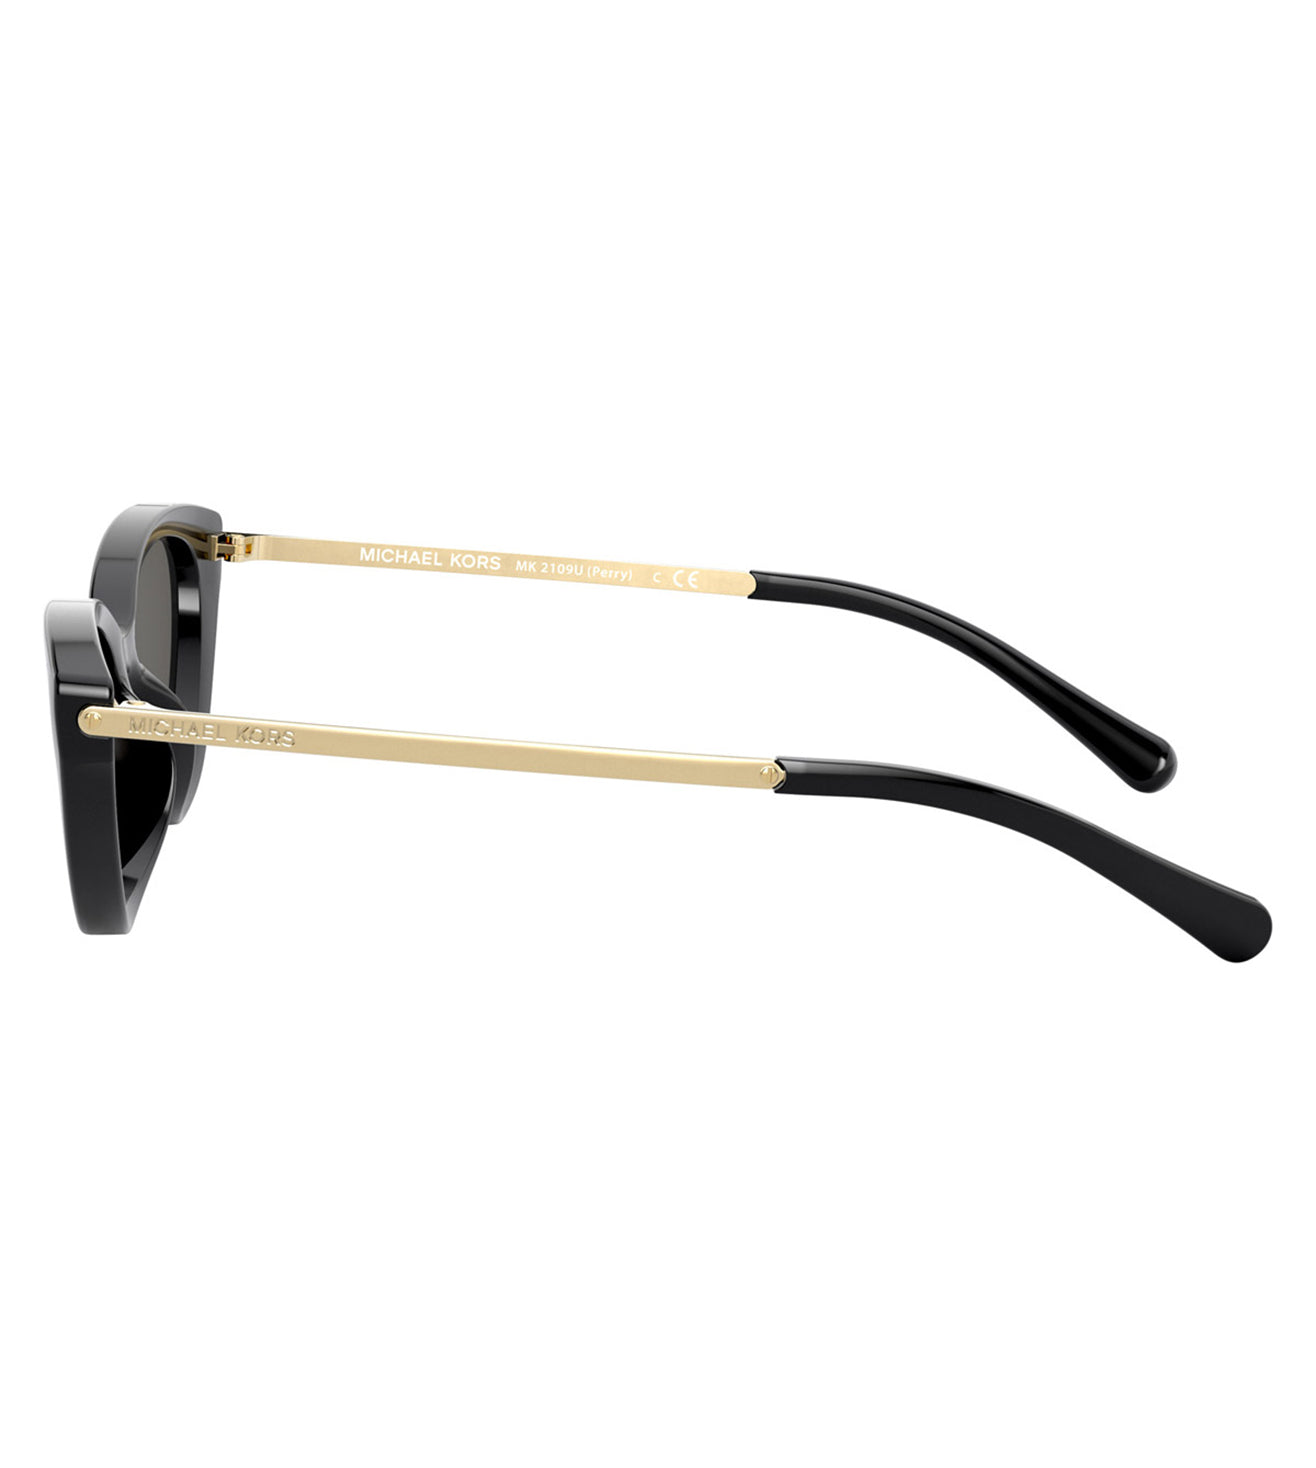 Michael Kors Women's Dark Grey Cat-eye Sunglasses